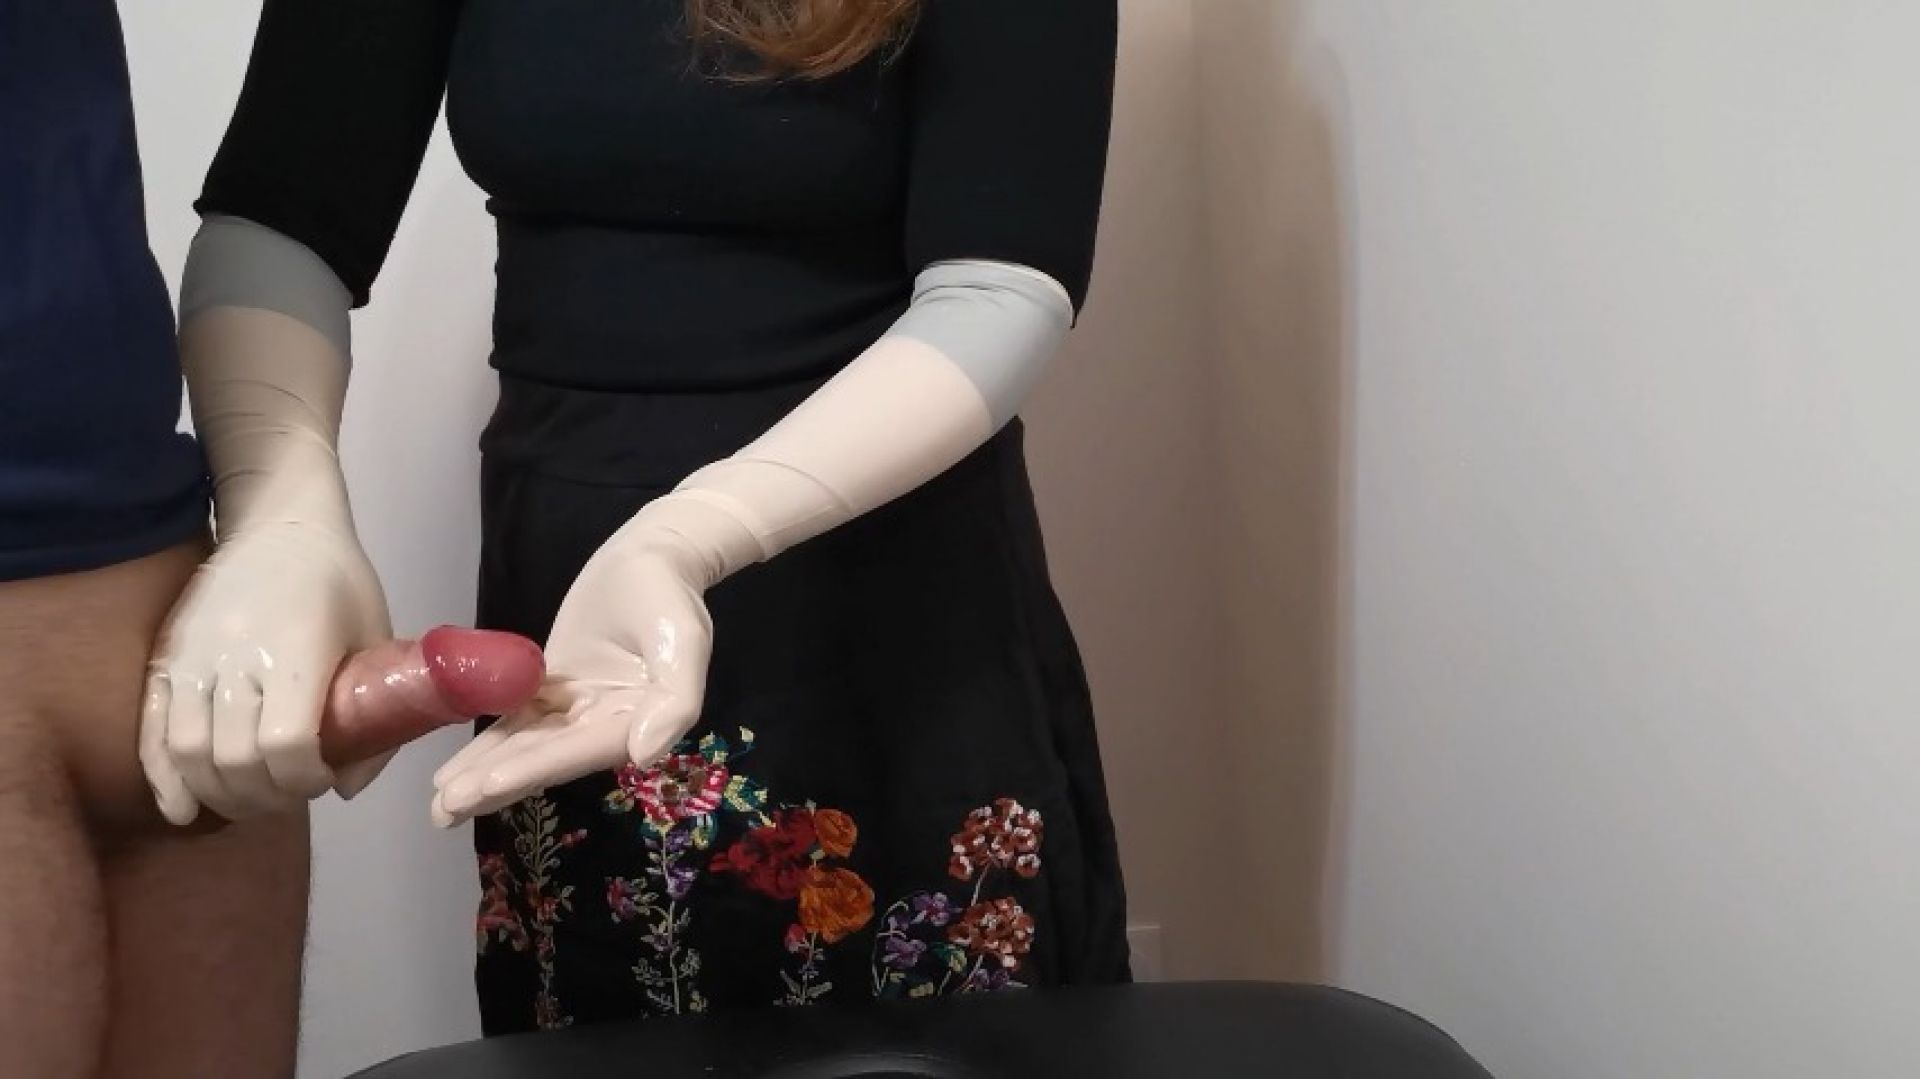 Nurse handjob with gynecological gloves